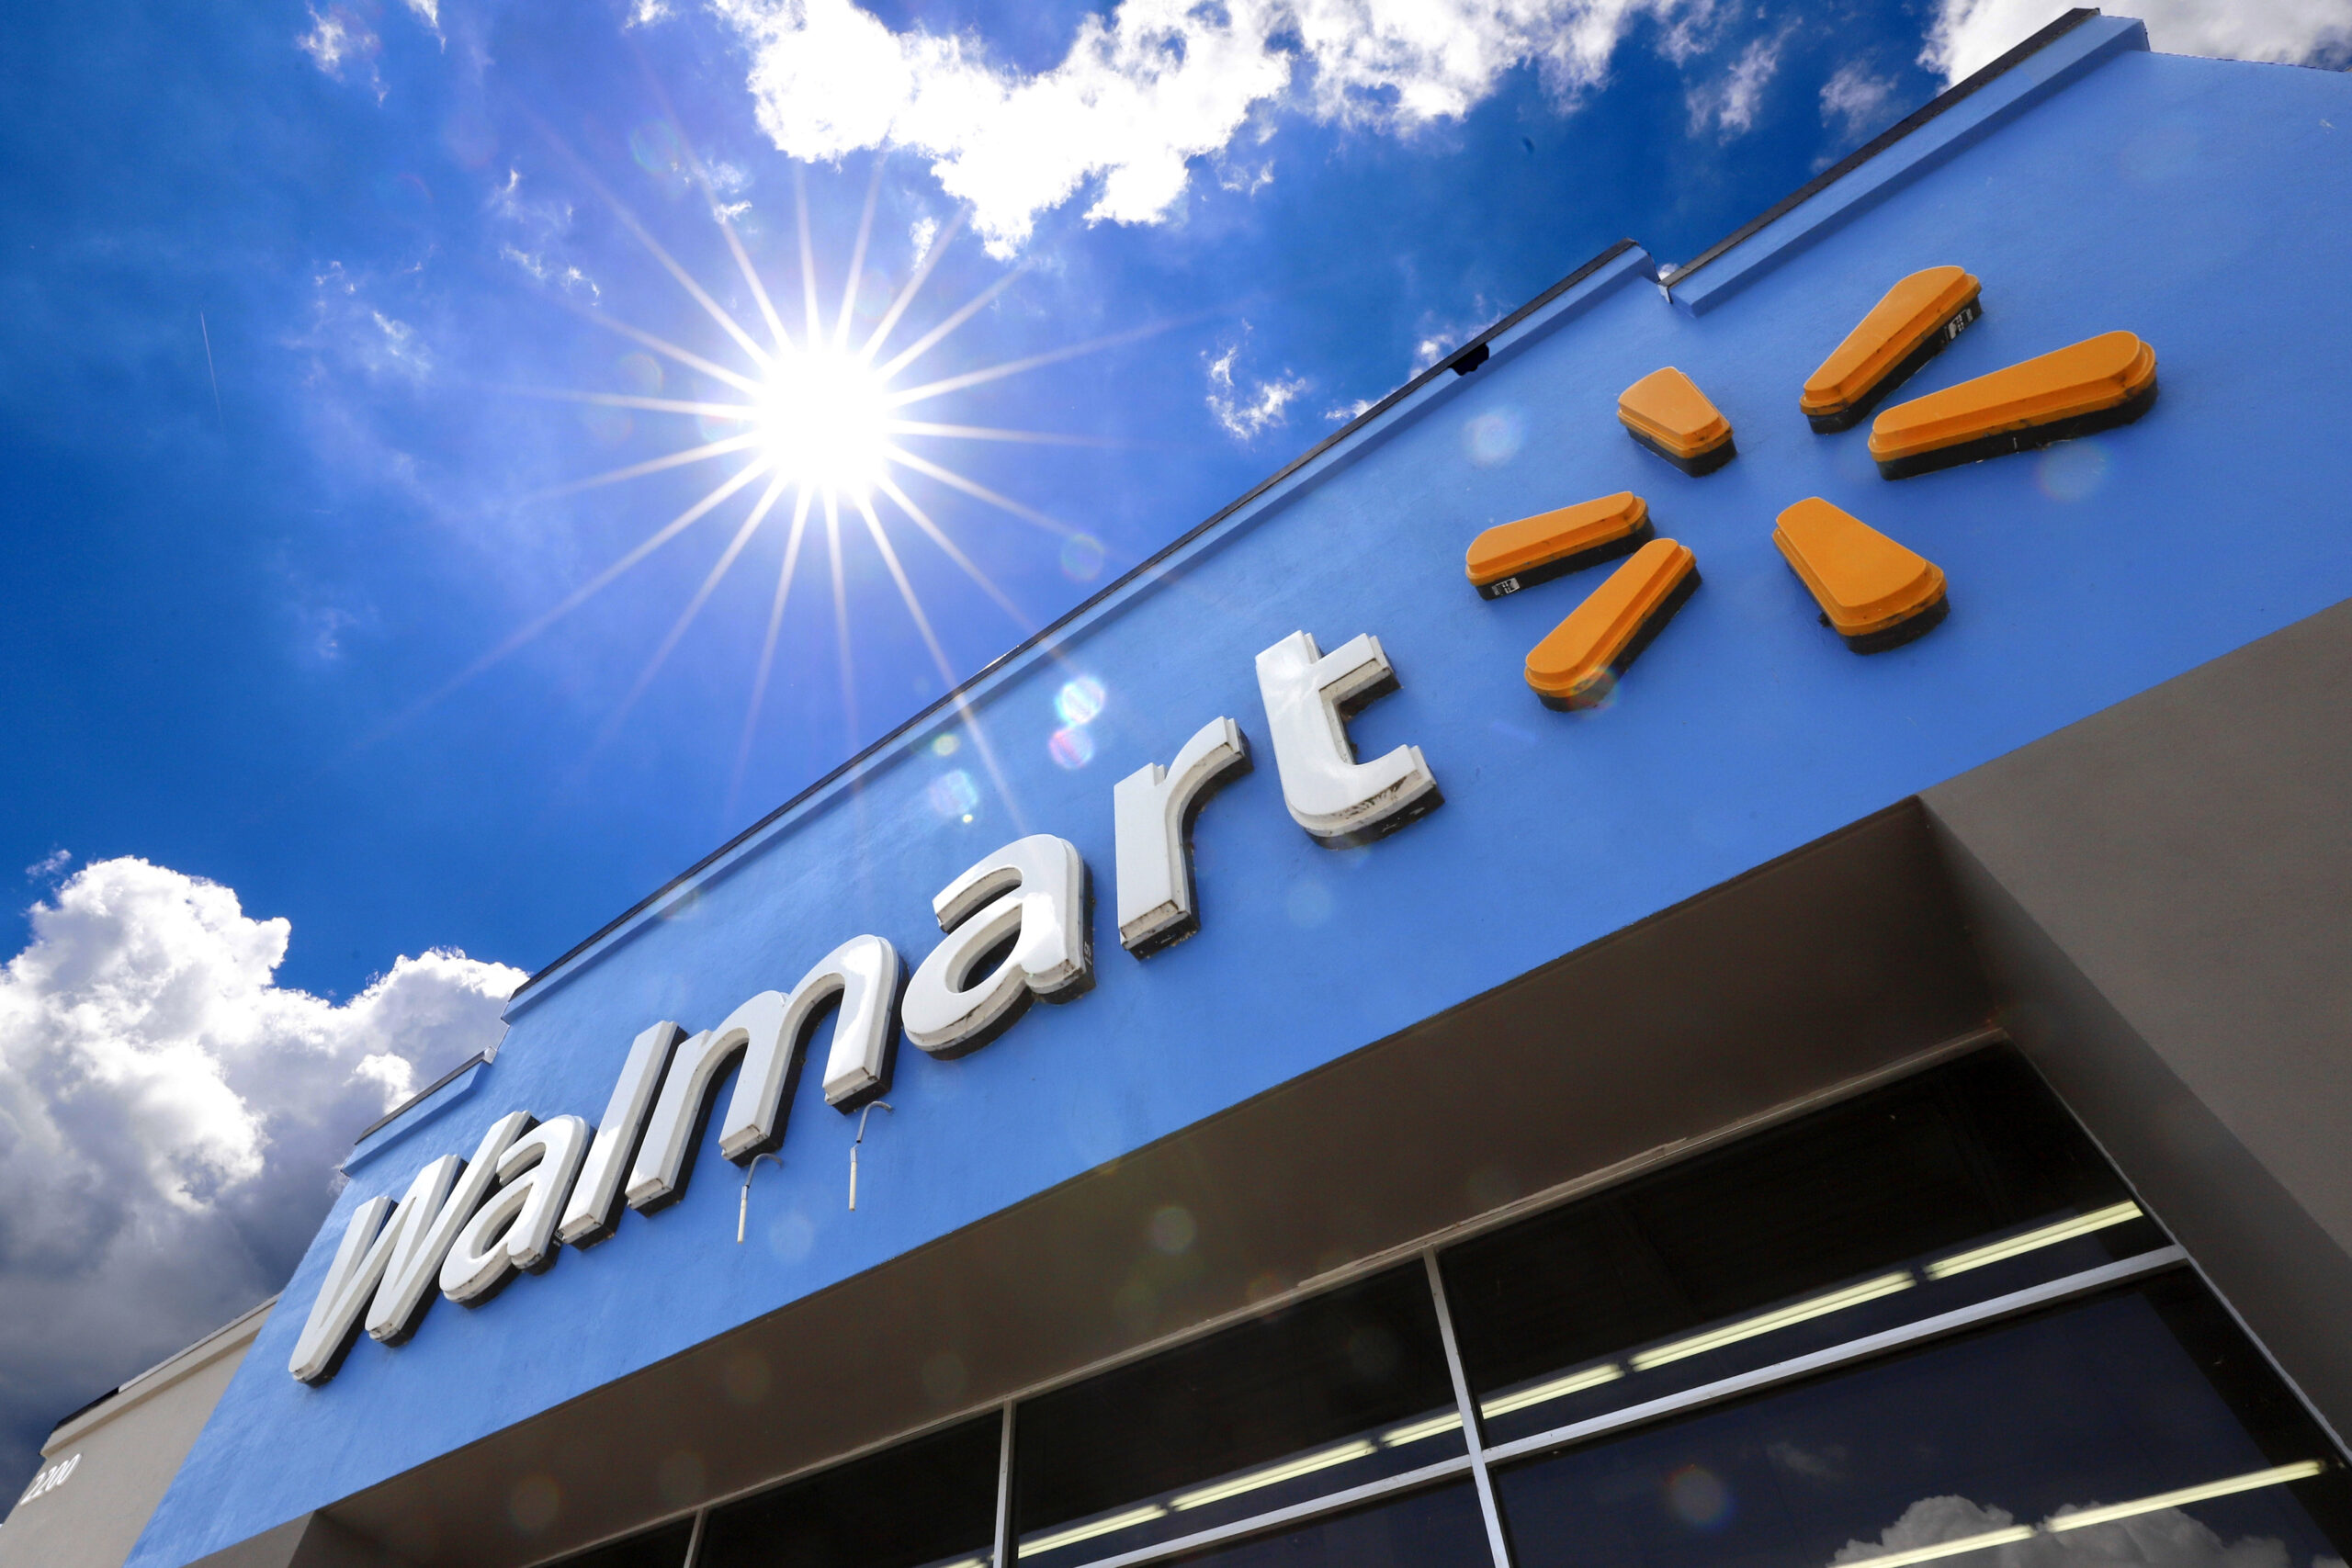 WATCH: Ex-teacher says he makes more money working as Walmart professional - Washington Examiner